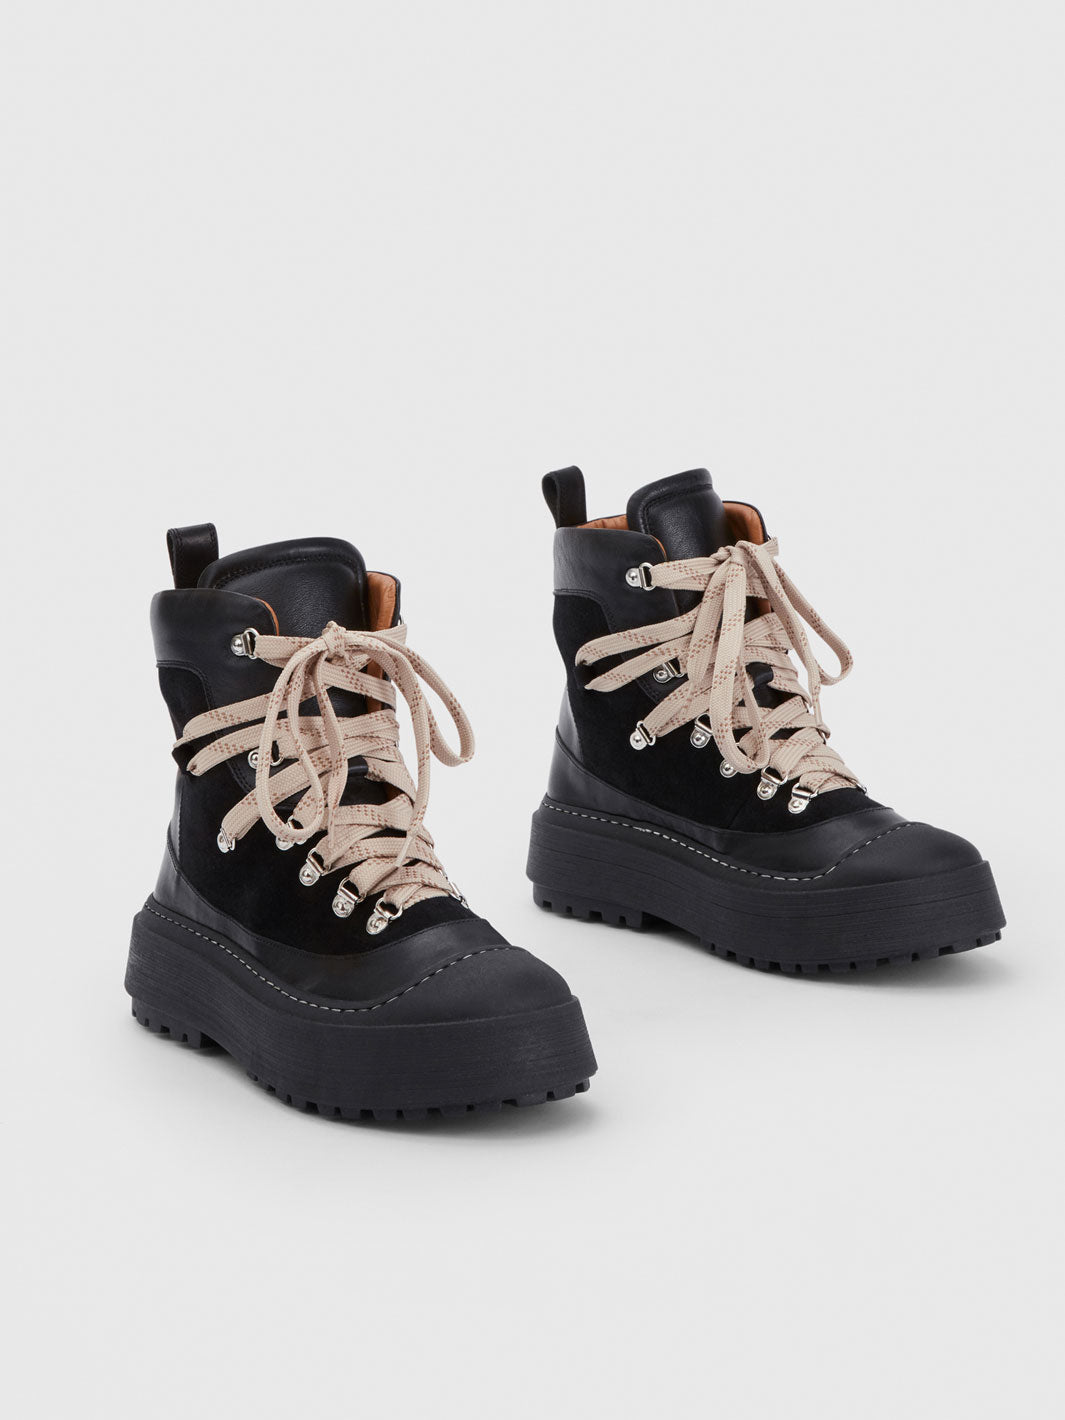 Riardo Black Leather/Suede/Nappa Hiking boots